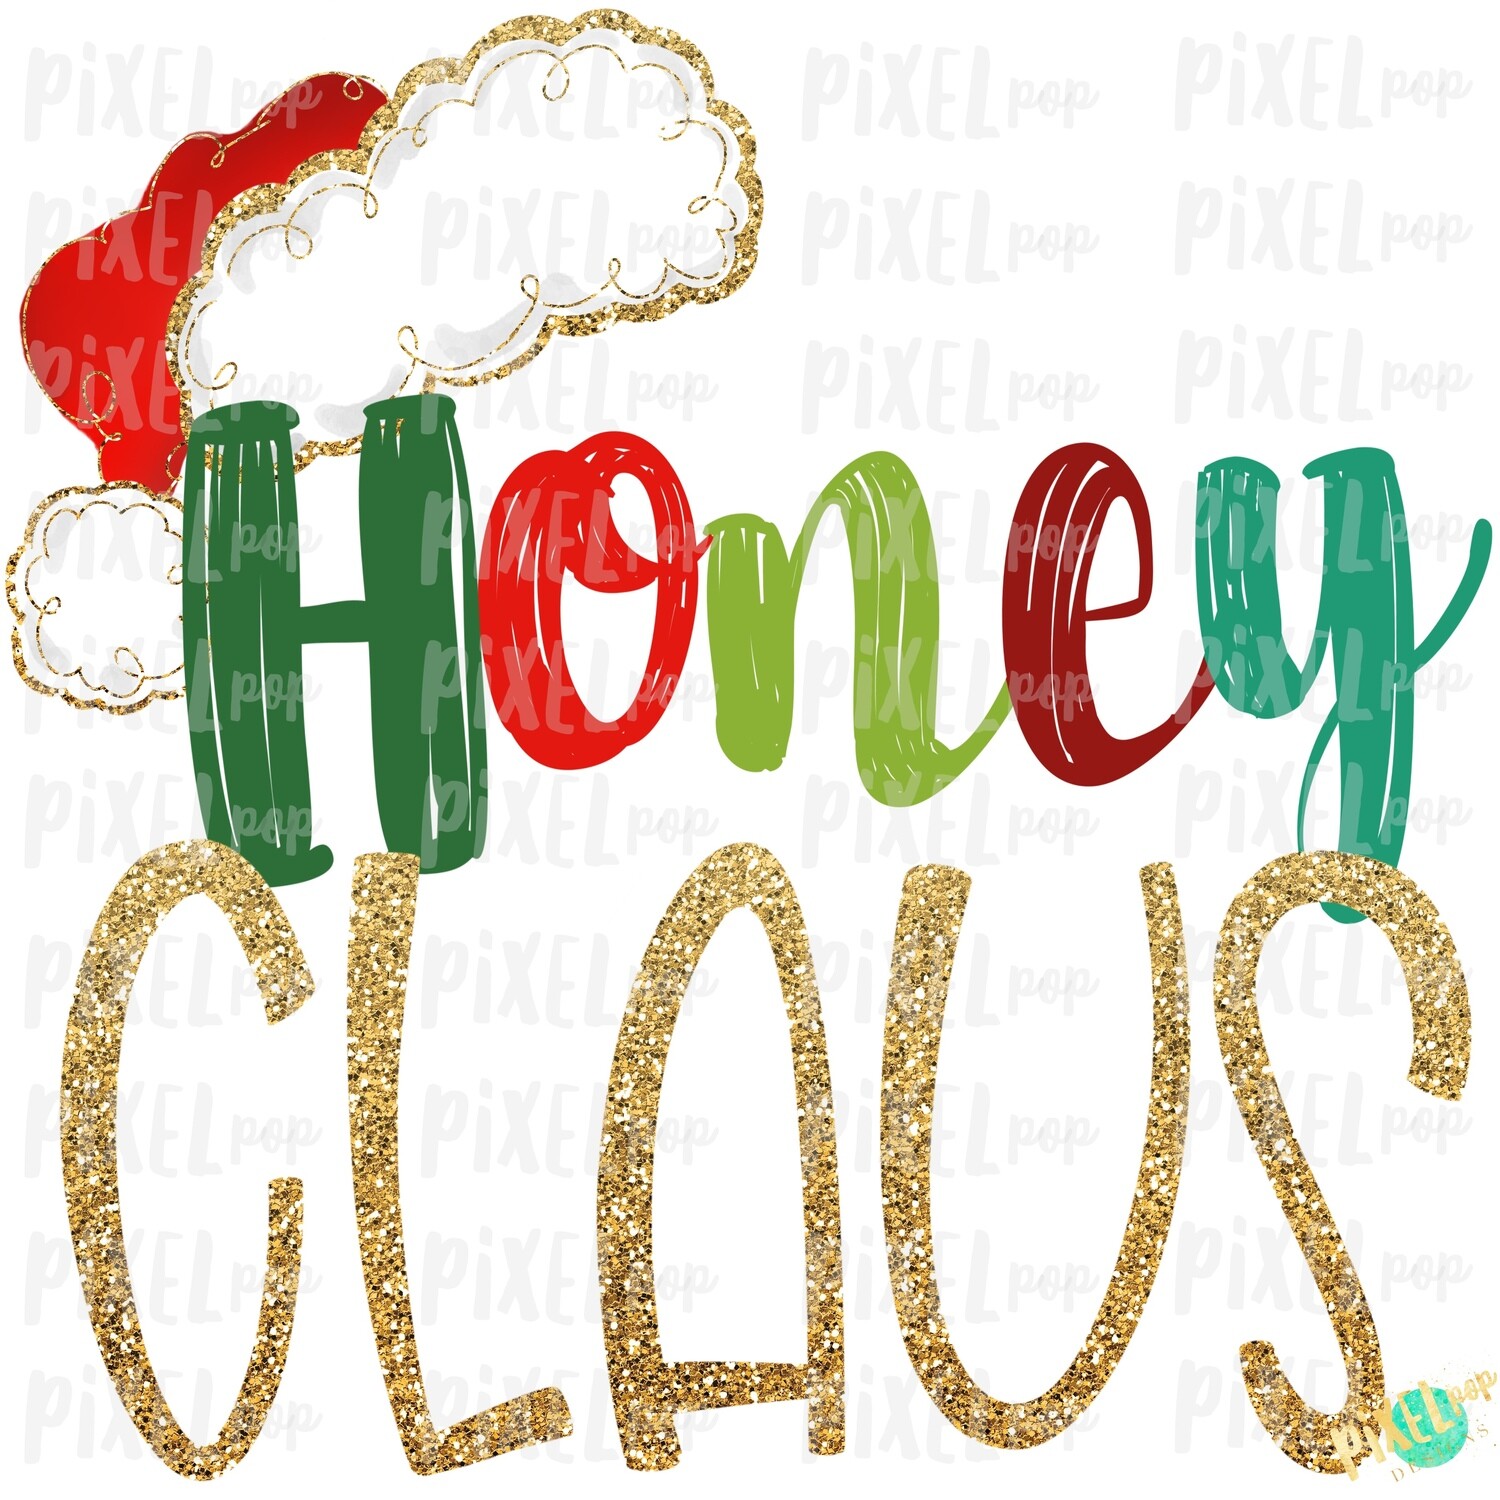 Honey Claus Santa Hat Digital Watercolor Sublimation PNG Art | Drawn Design | Sublimation PNG | Digital Download | Printable Artwork | Art